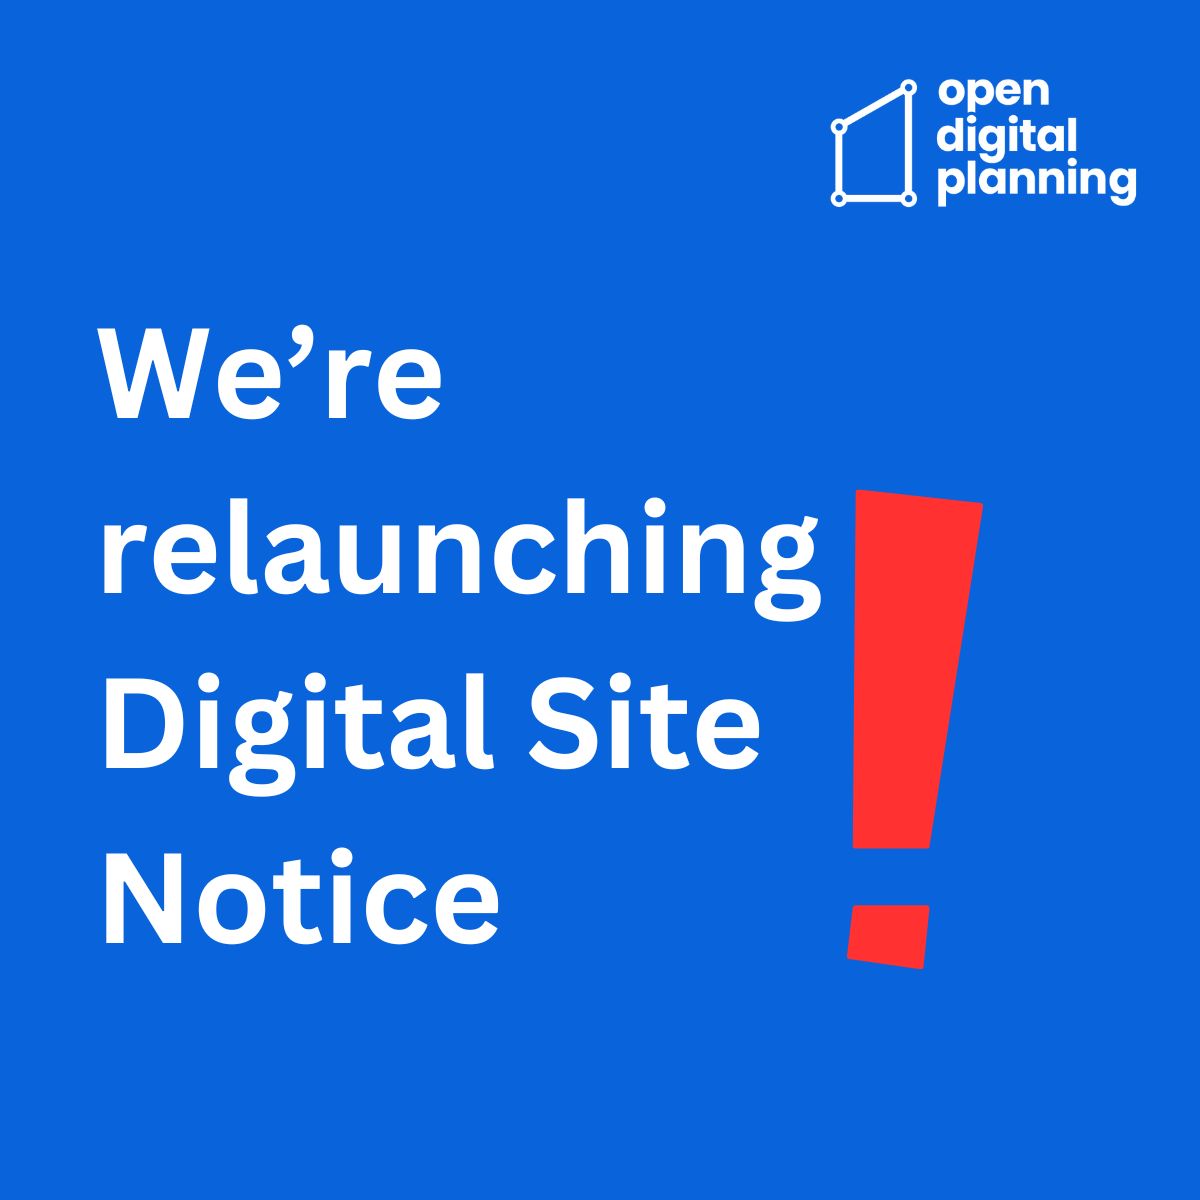 We're launching Digital Site Notice!